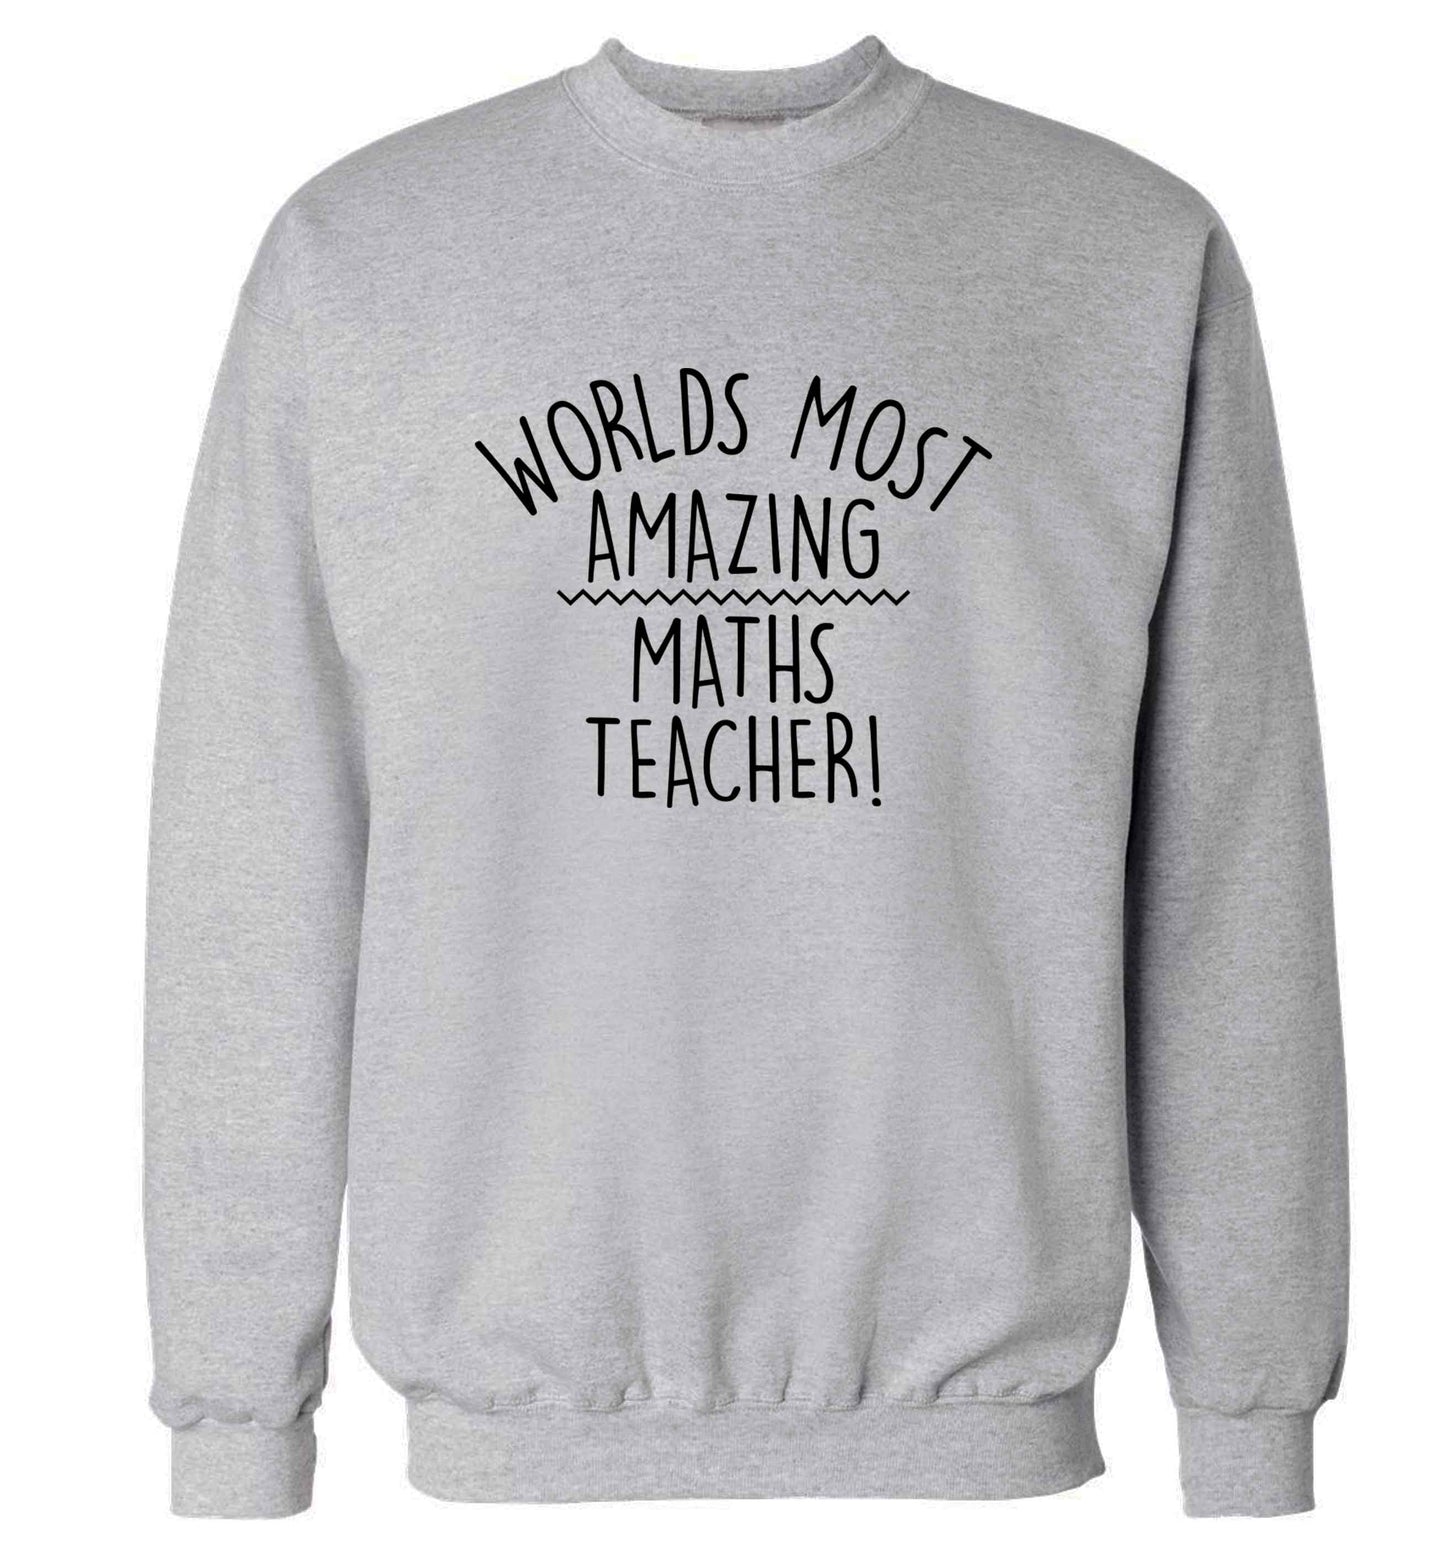 Worlds most amazing maths teacher adult's unisex grey sweater 2XL